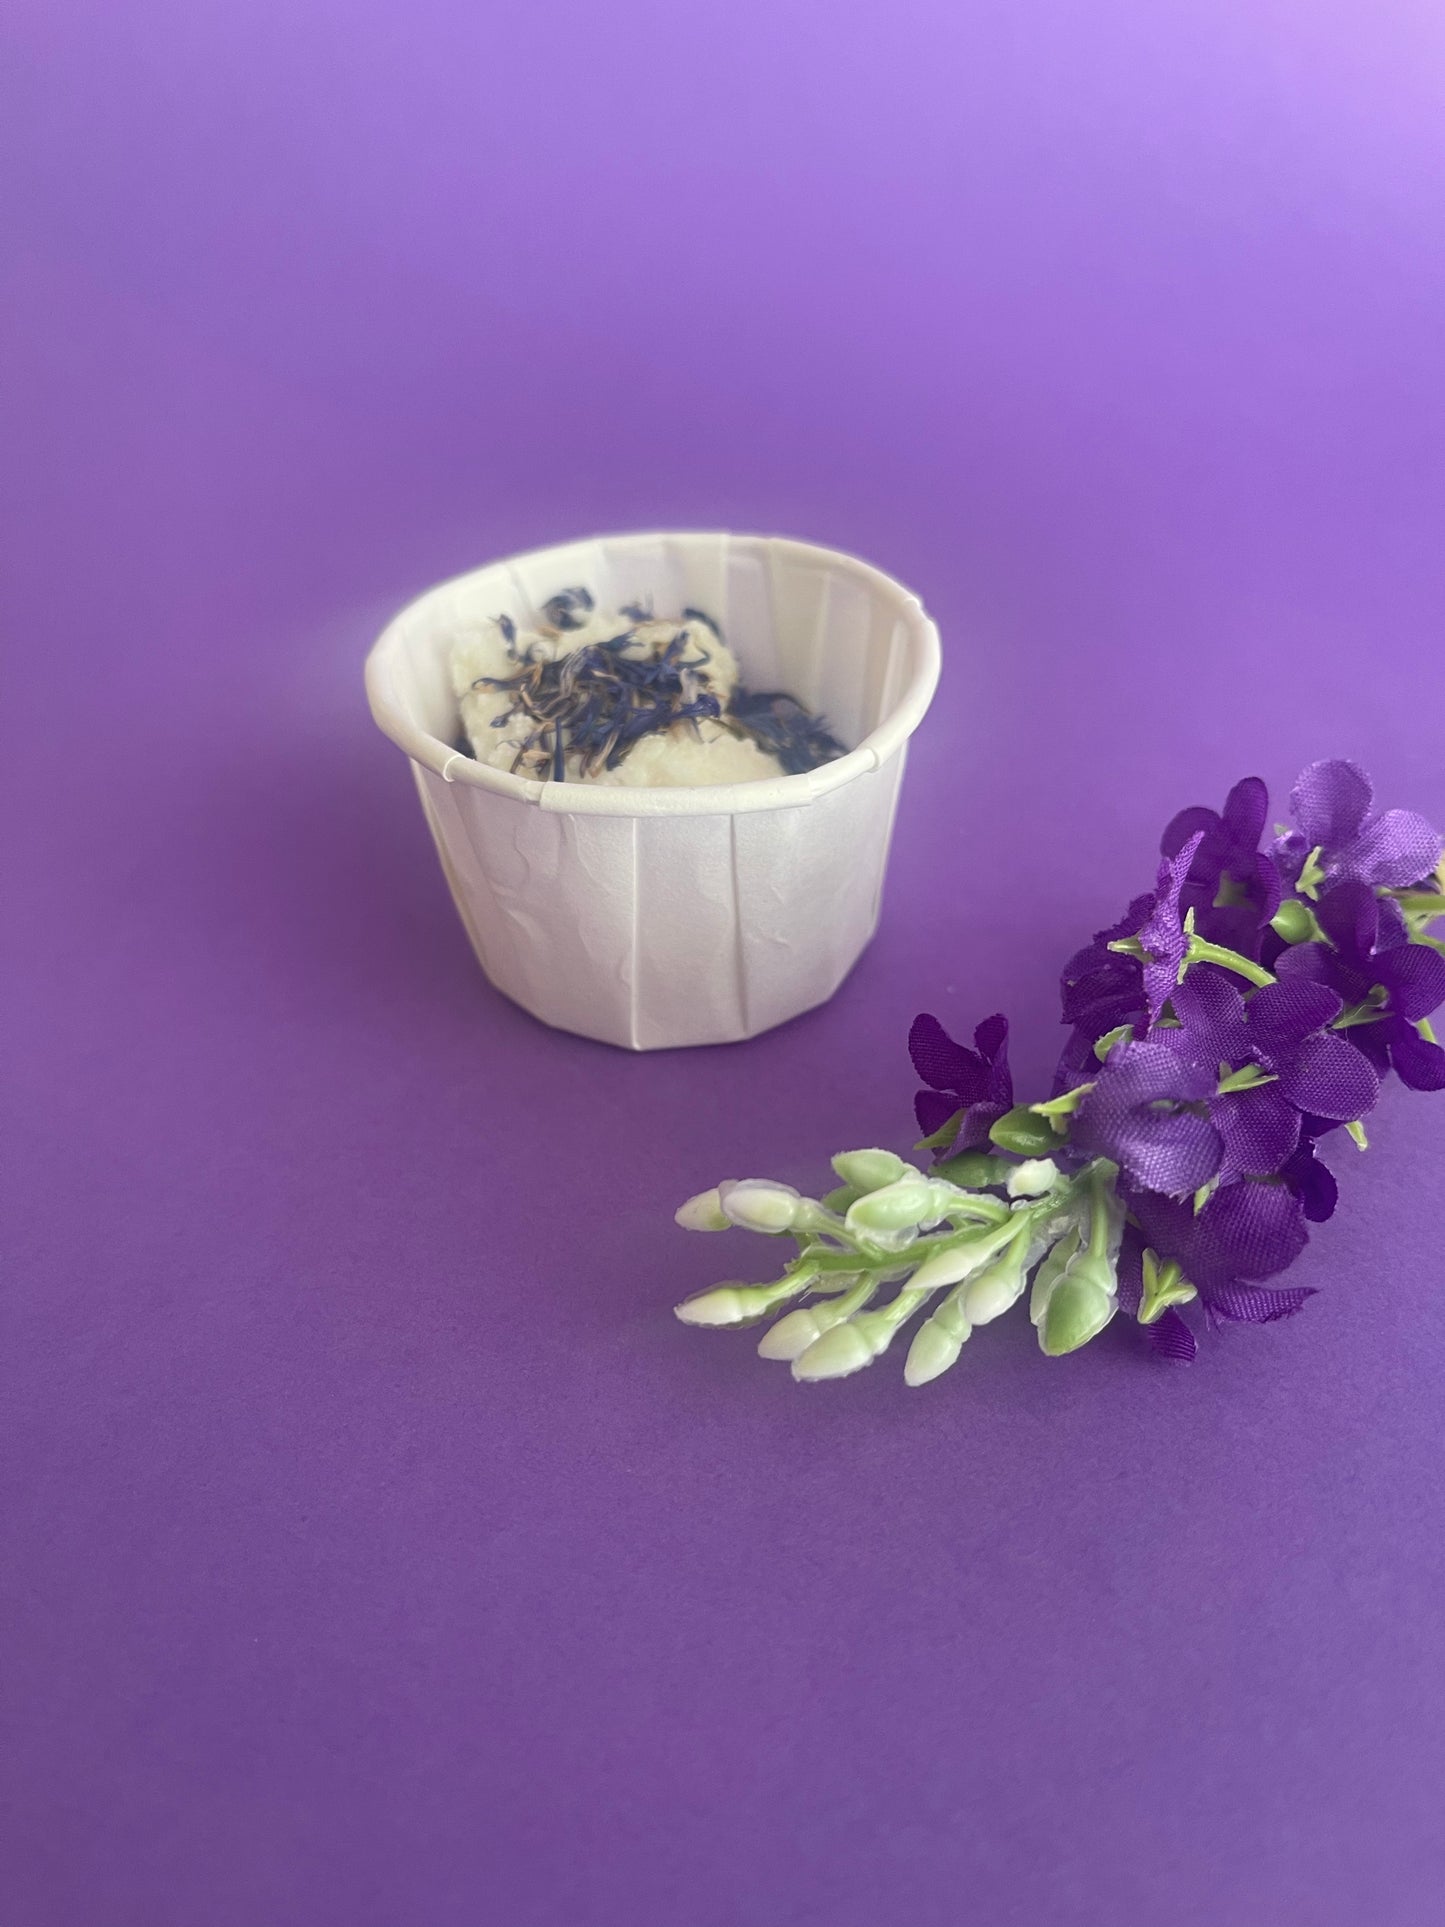 Lavender and Bergamot Sleepy Time Bath Truffle